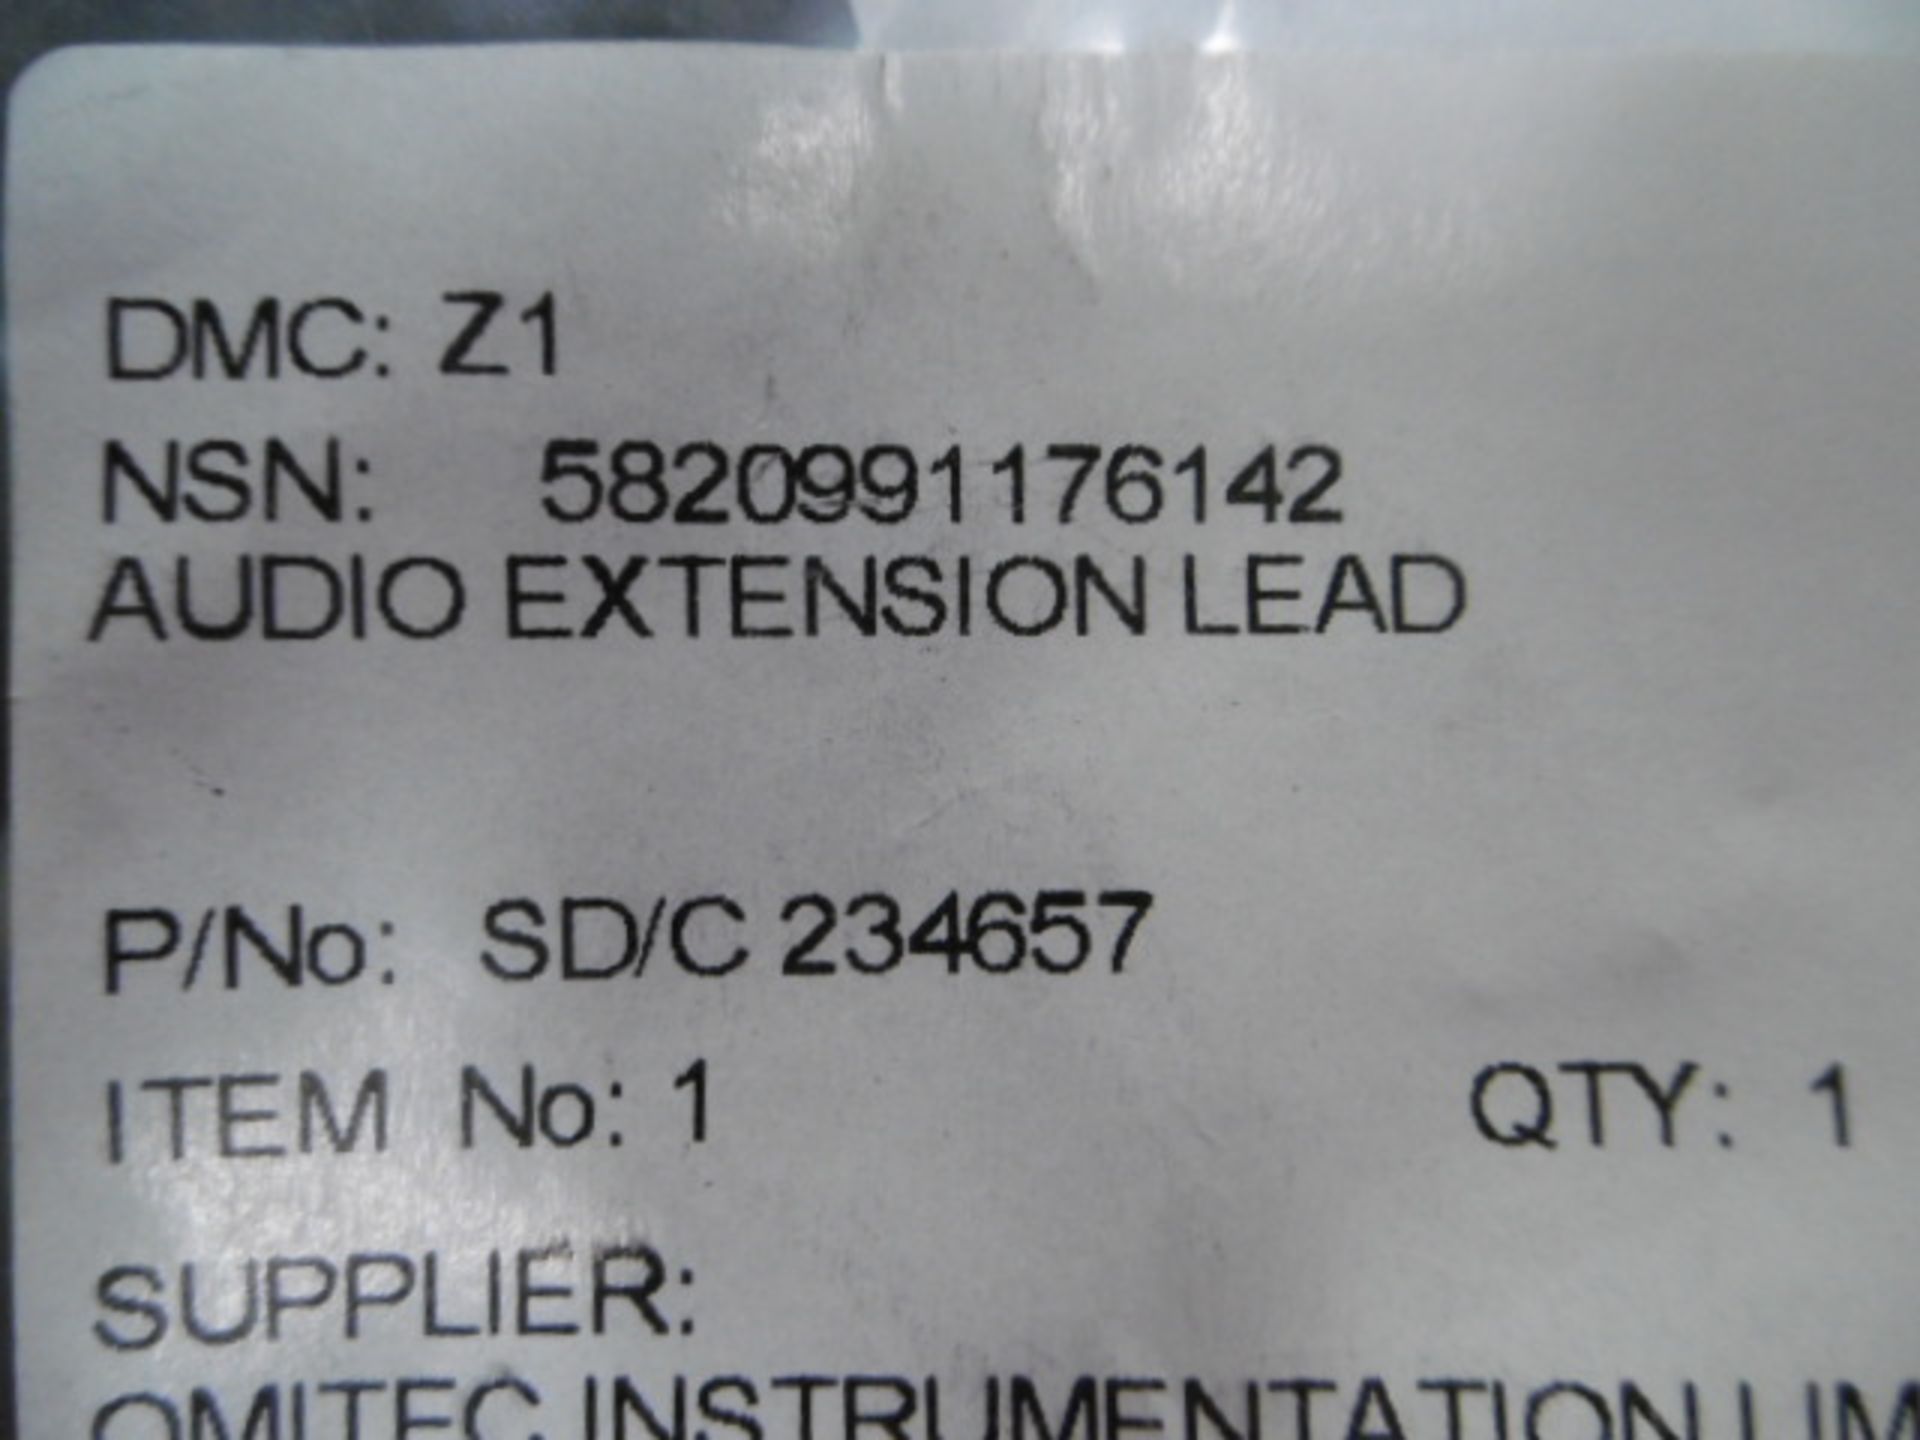 10 x Clansman Audio Extension Leads P/No SD/C 234657 - Image 5 of 5